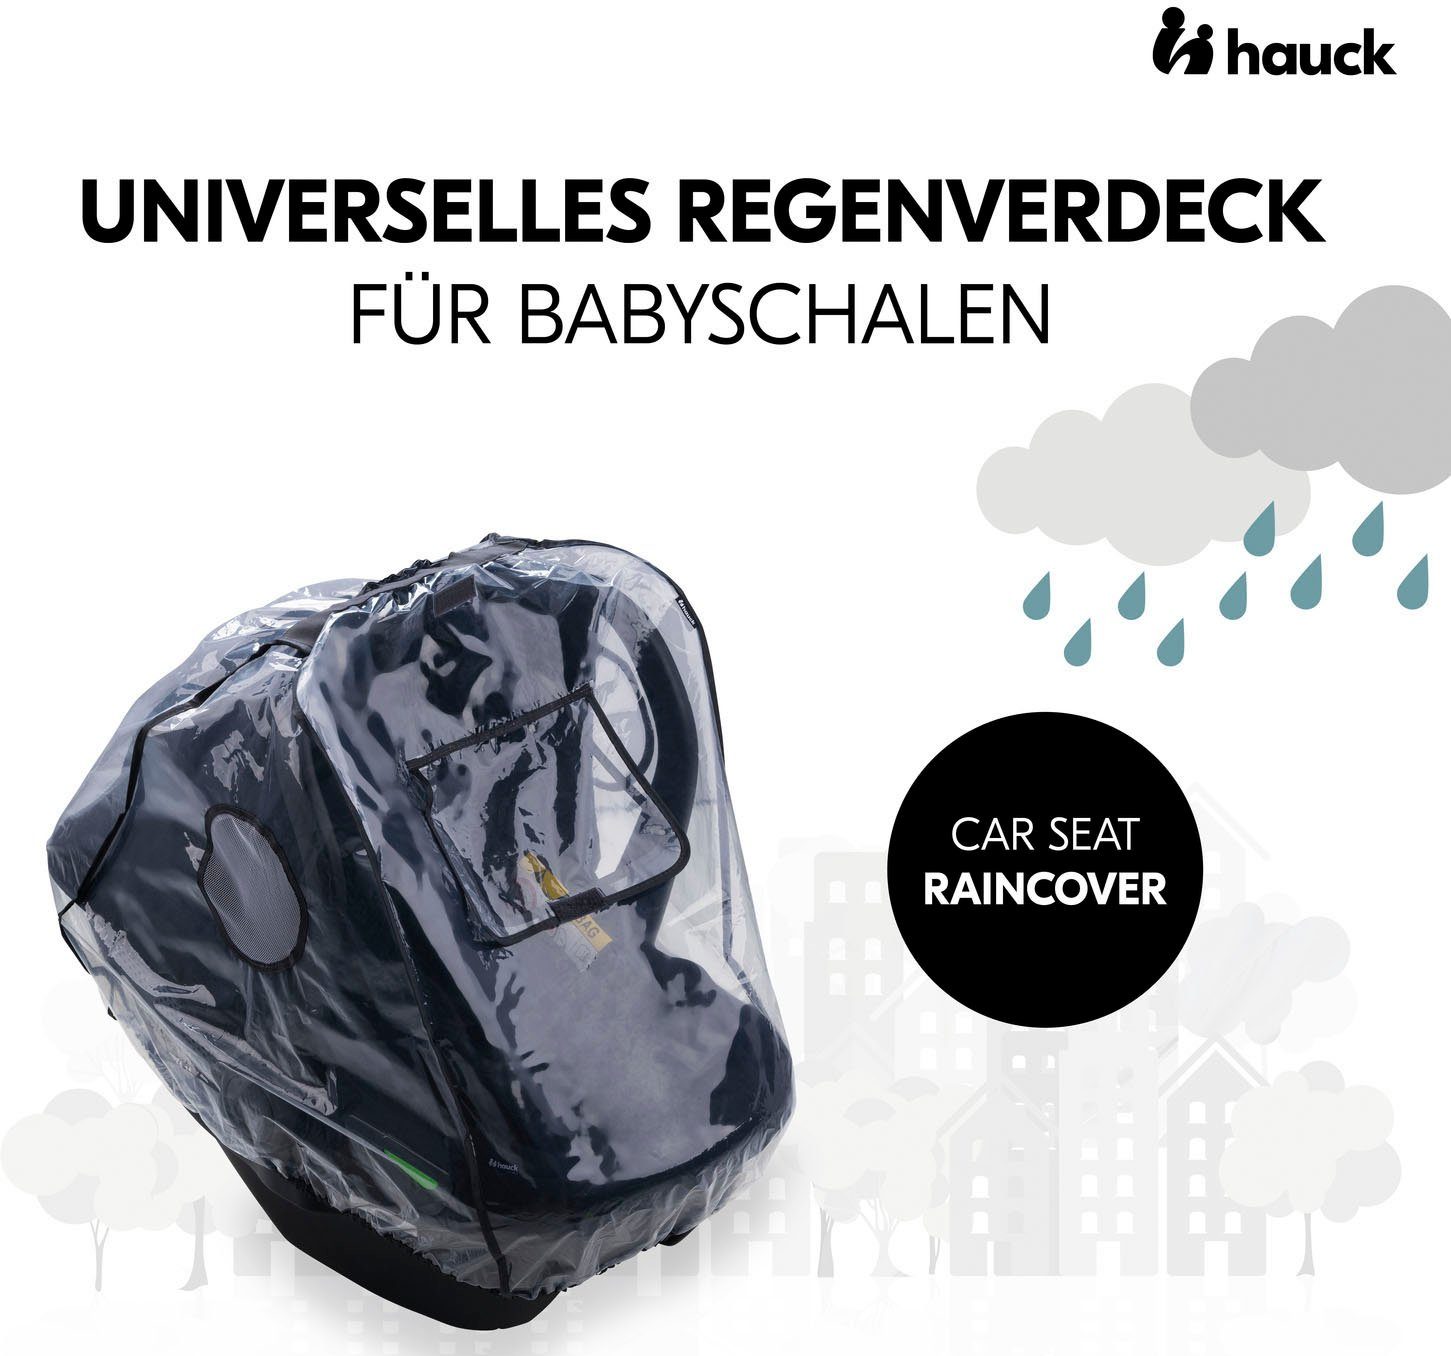 Hauck Regenverdeck Car Seat Raincover, universal